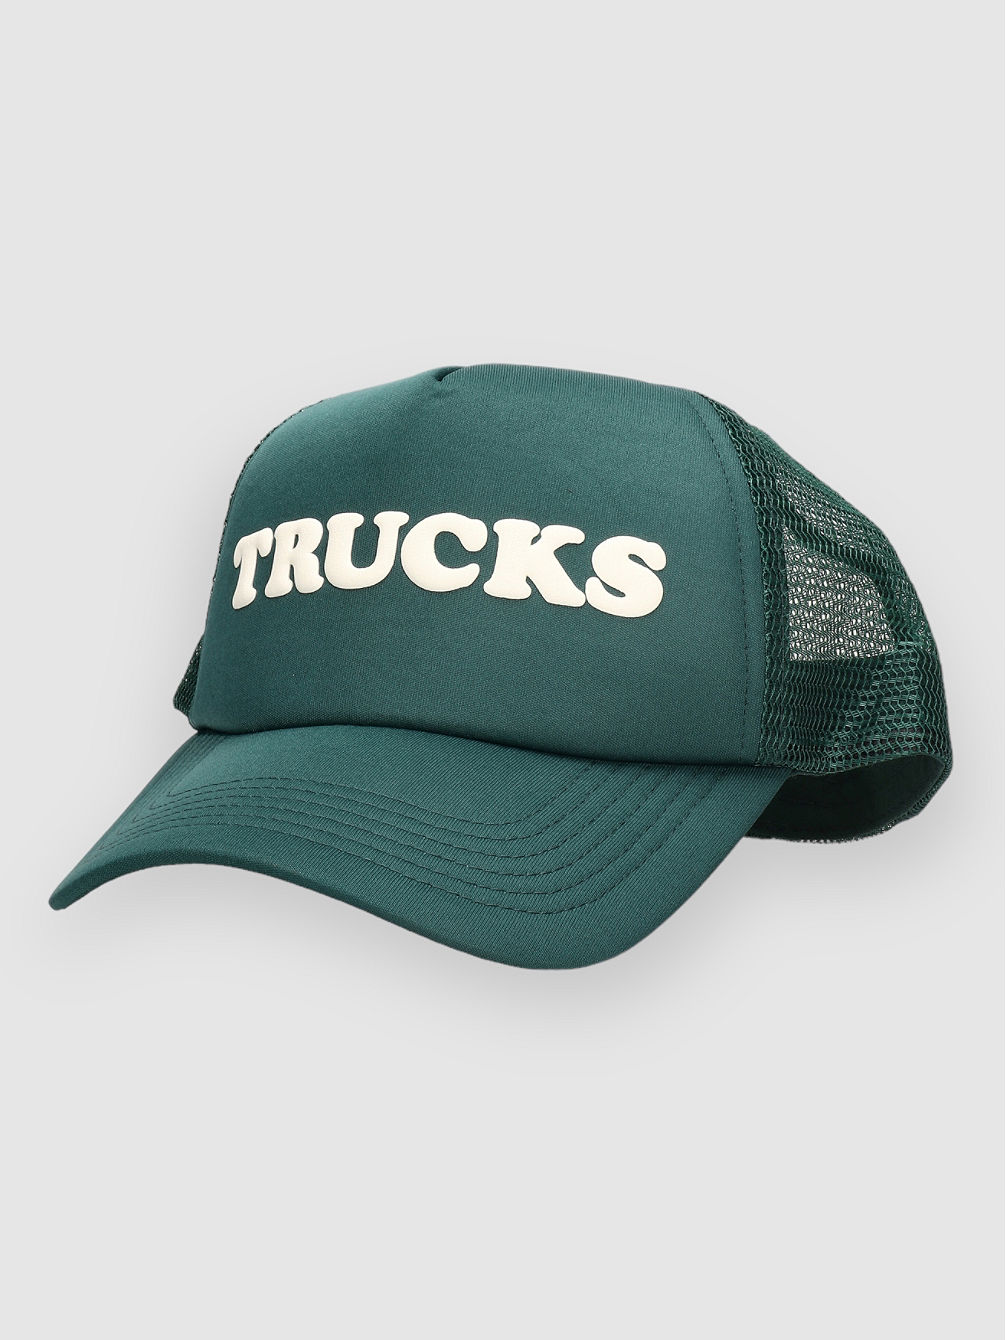 Trucks Trucker Lippis